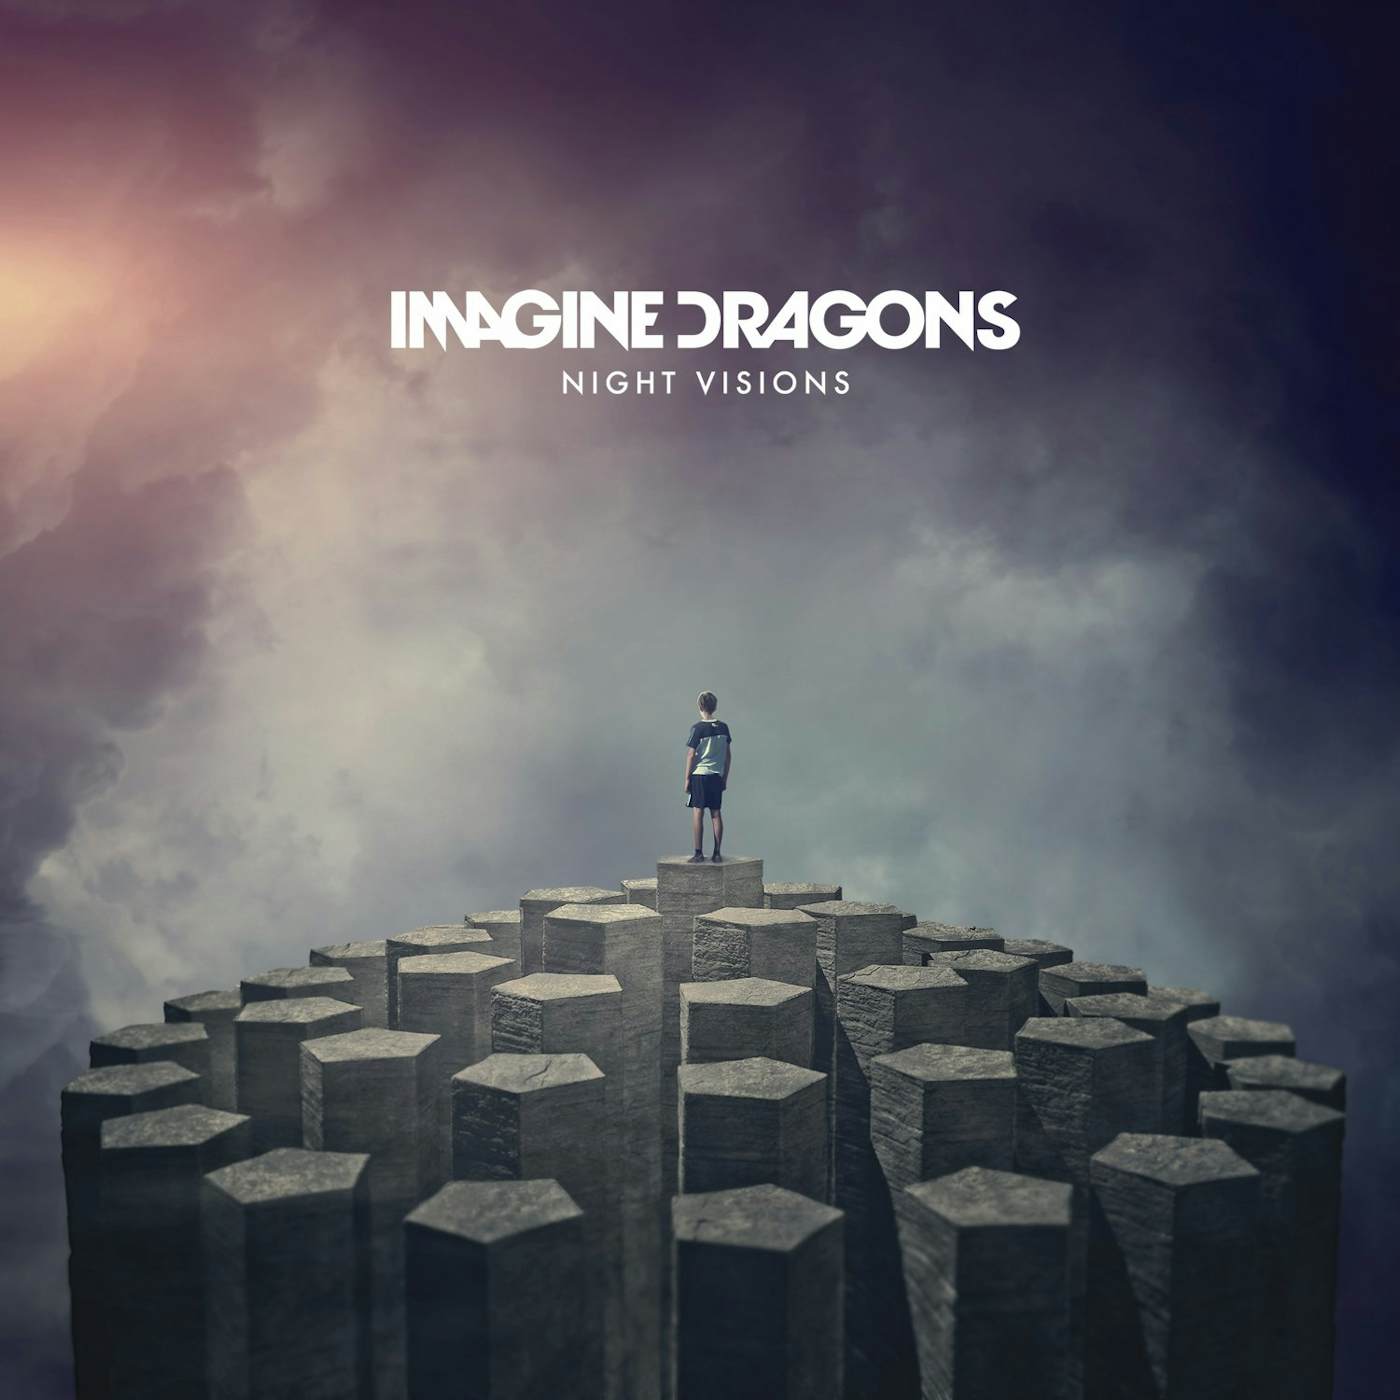 Imagine Dragons NIGHT VISIONS CD